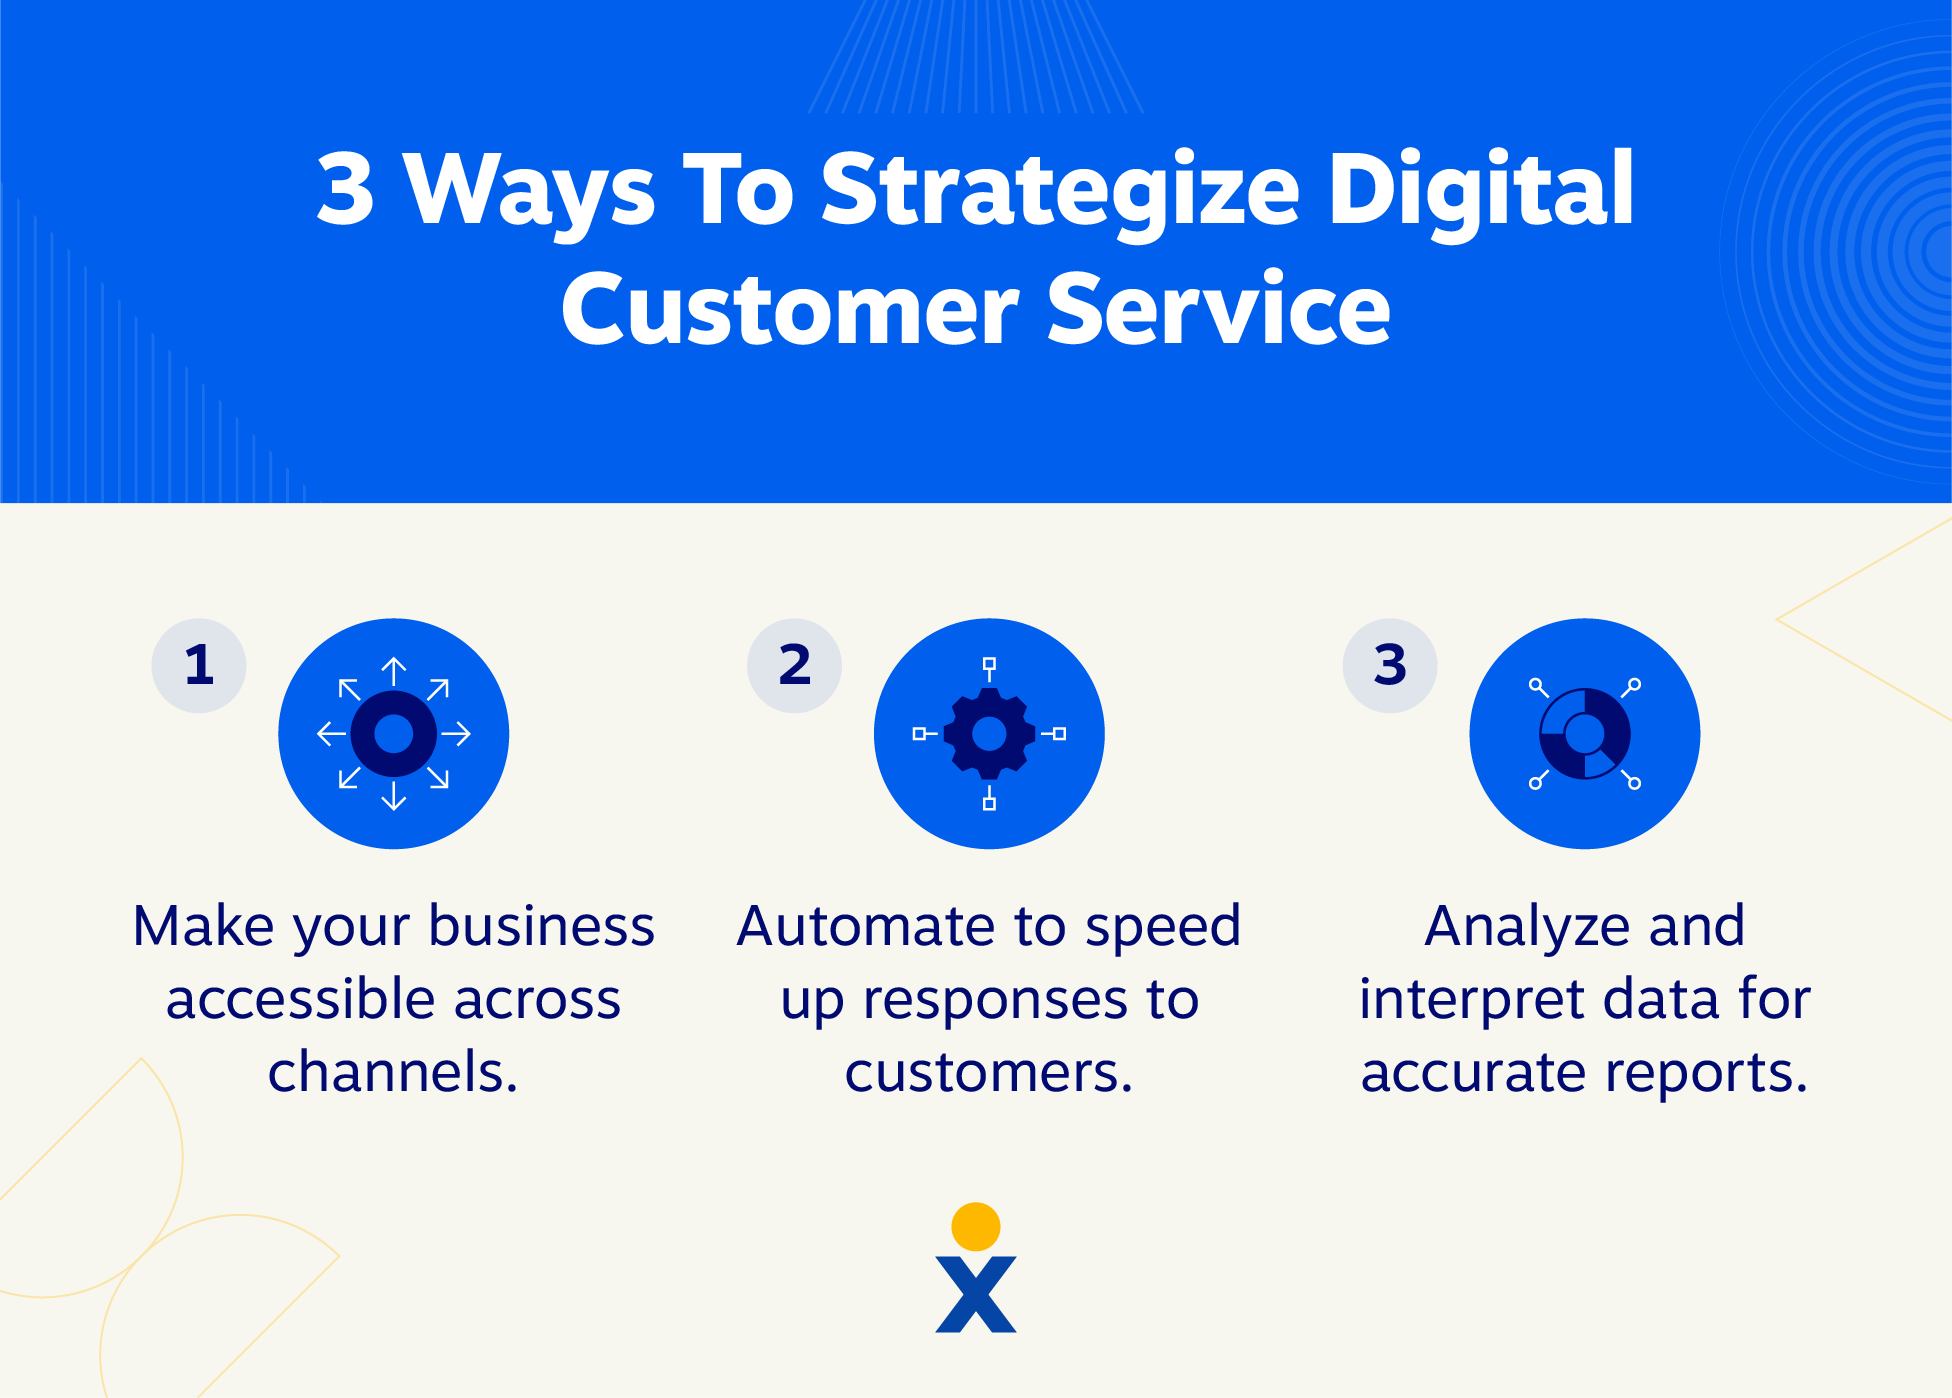 3 tips to strategize digital customer service